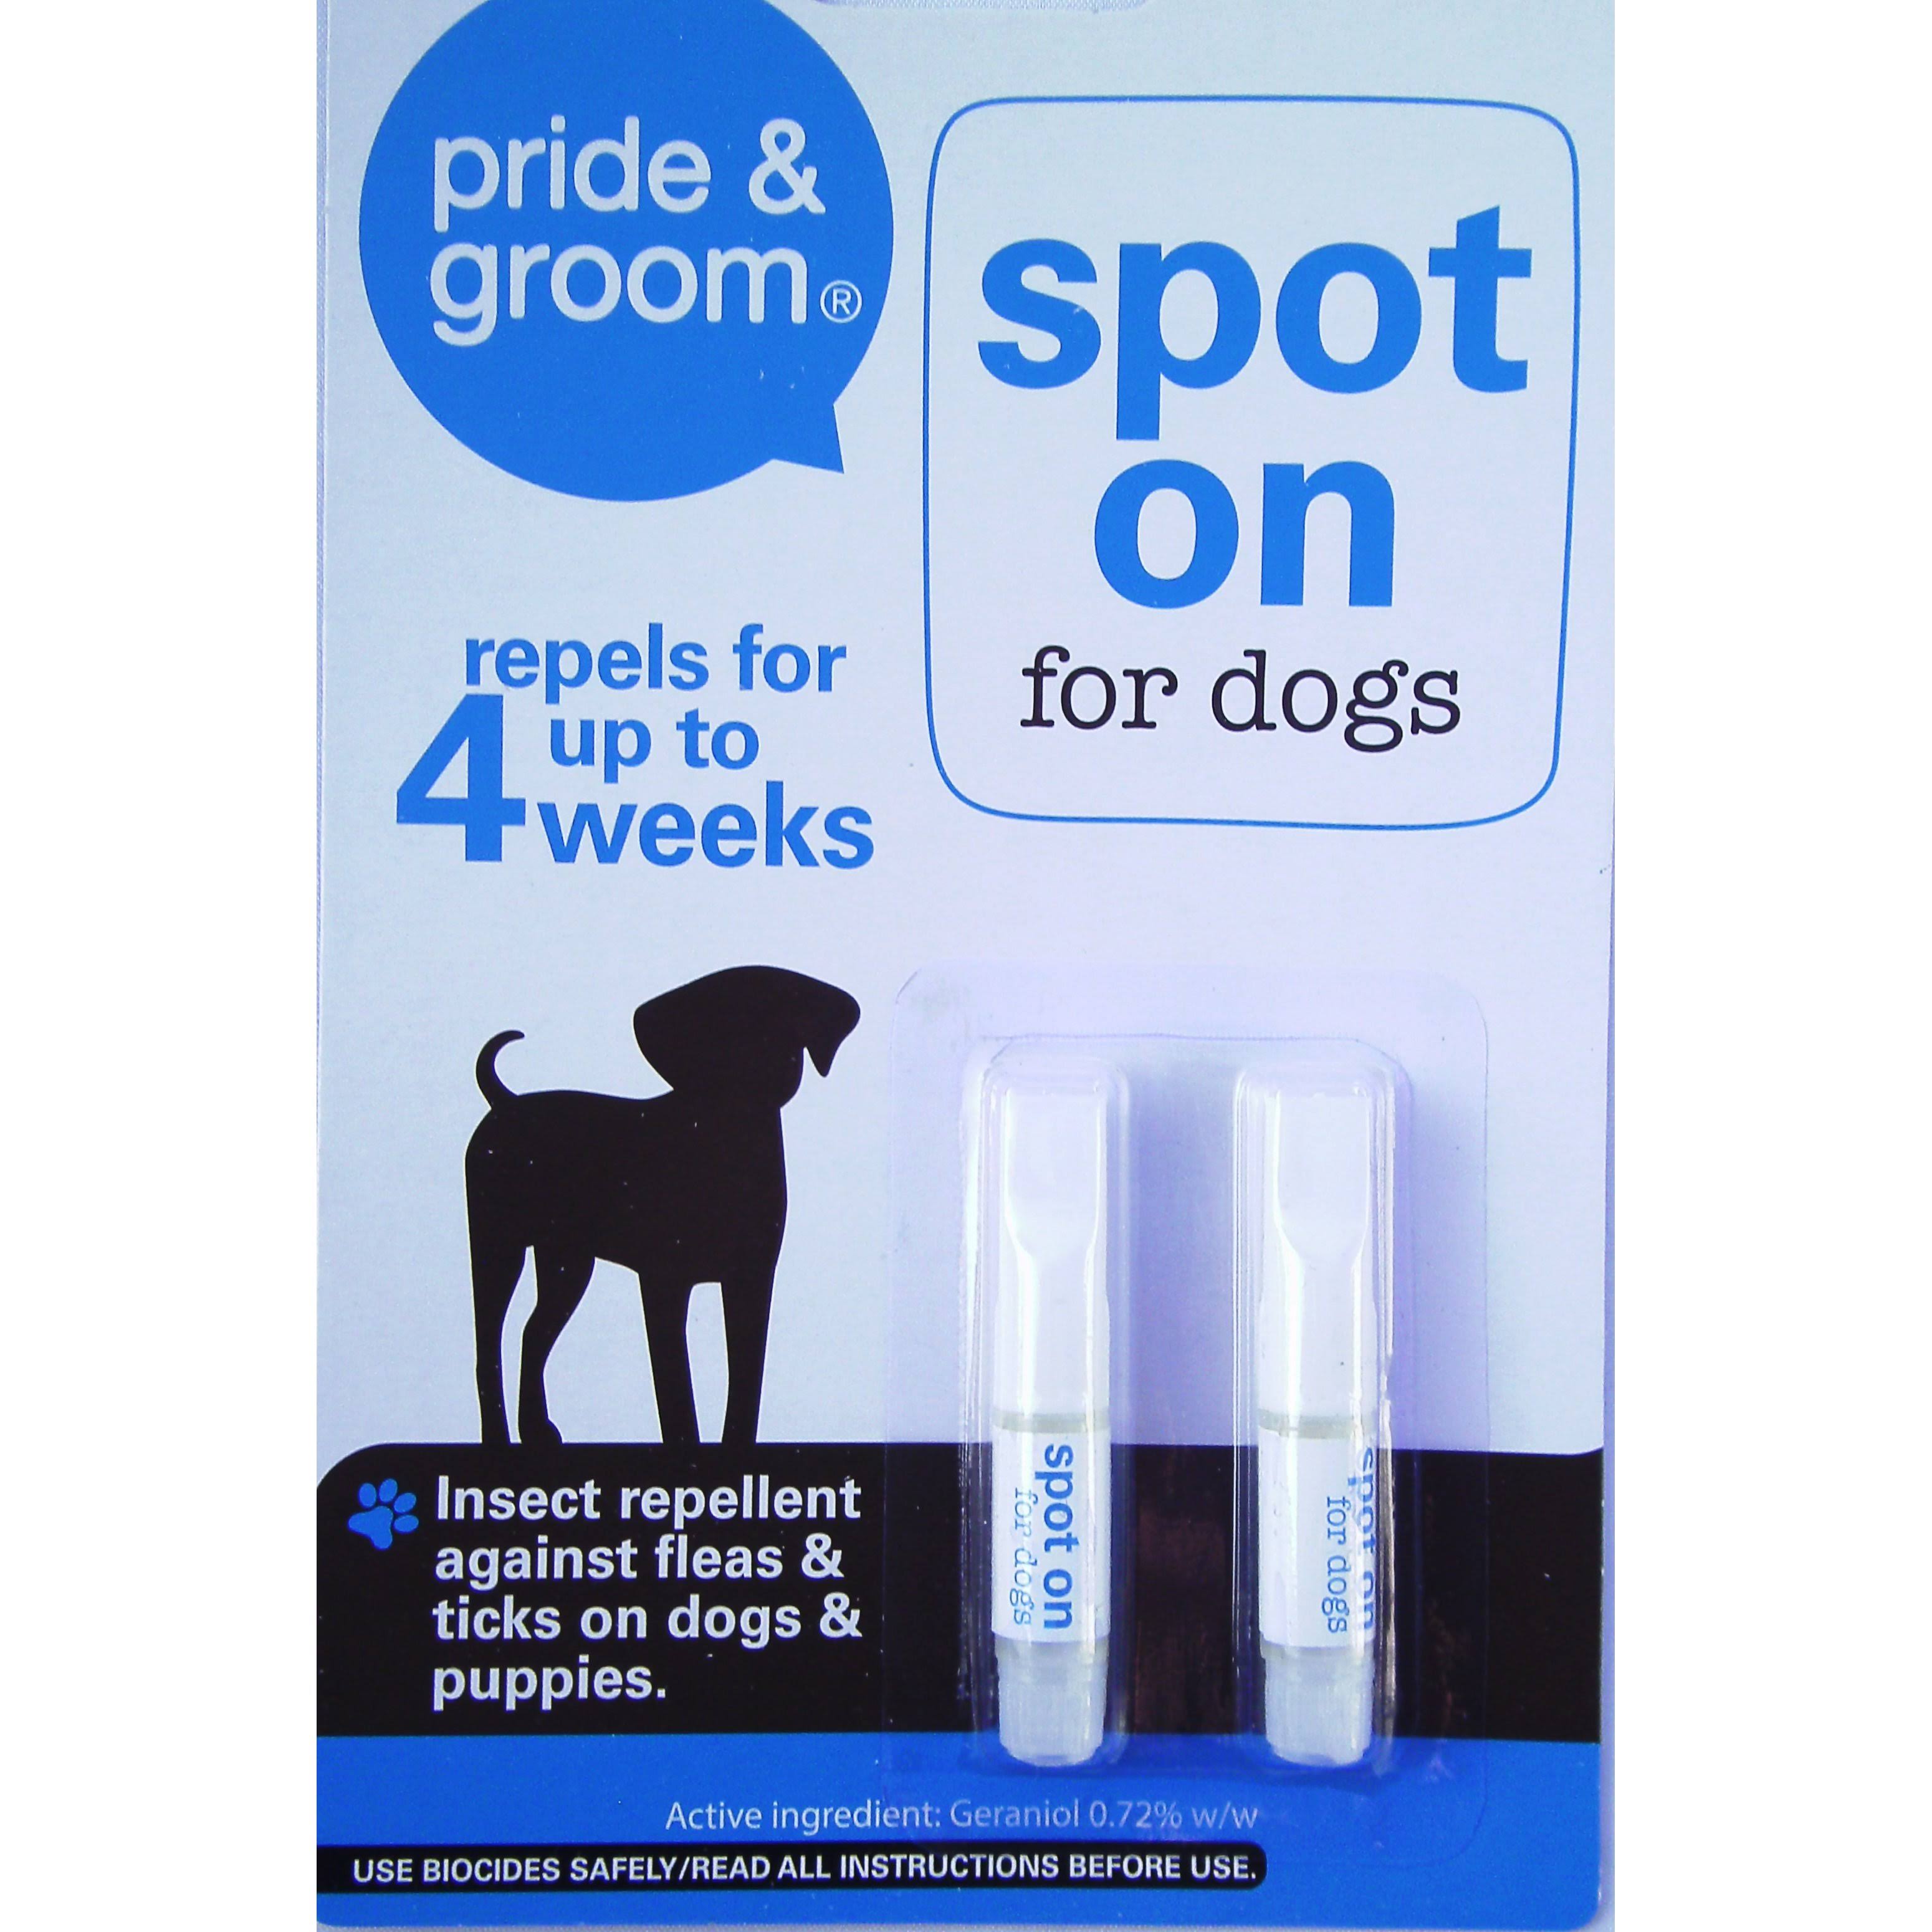 Pride & Groom Spot On For Dogs Puppies Flea Tick Treatment Repellent Fleas Ticks